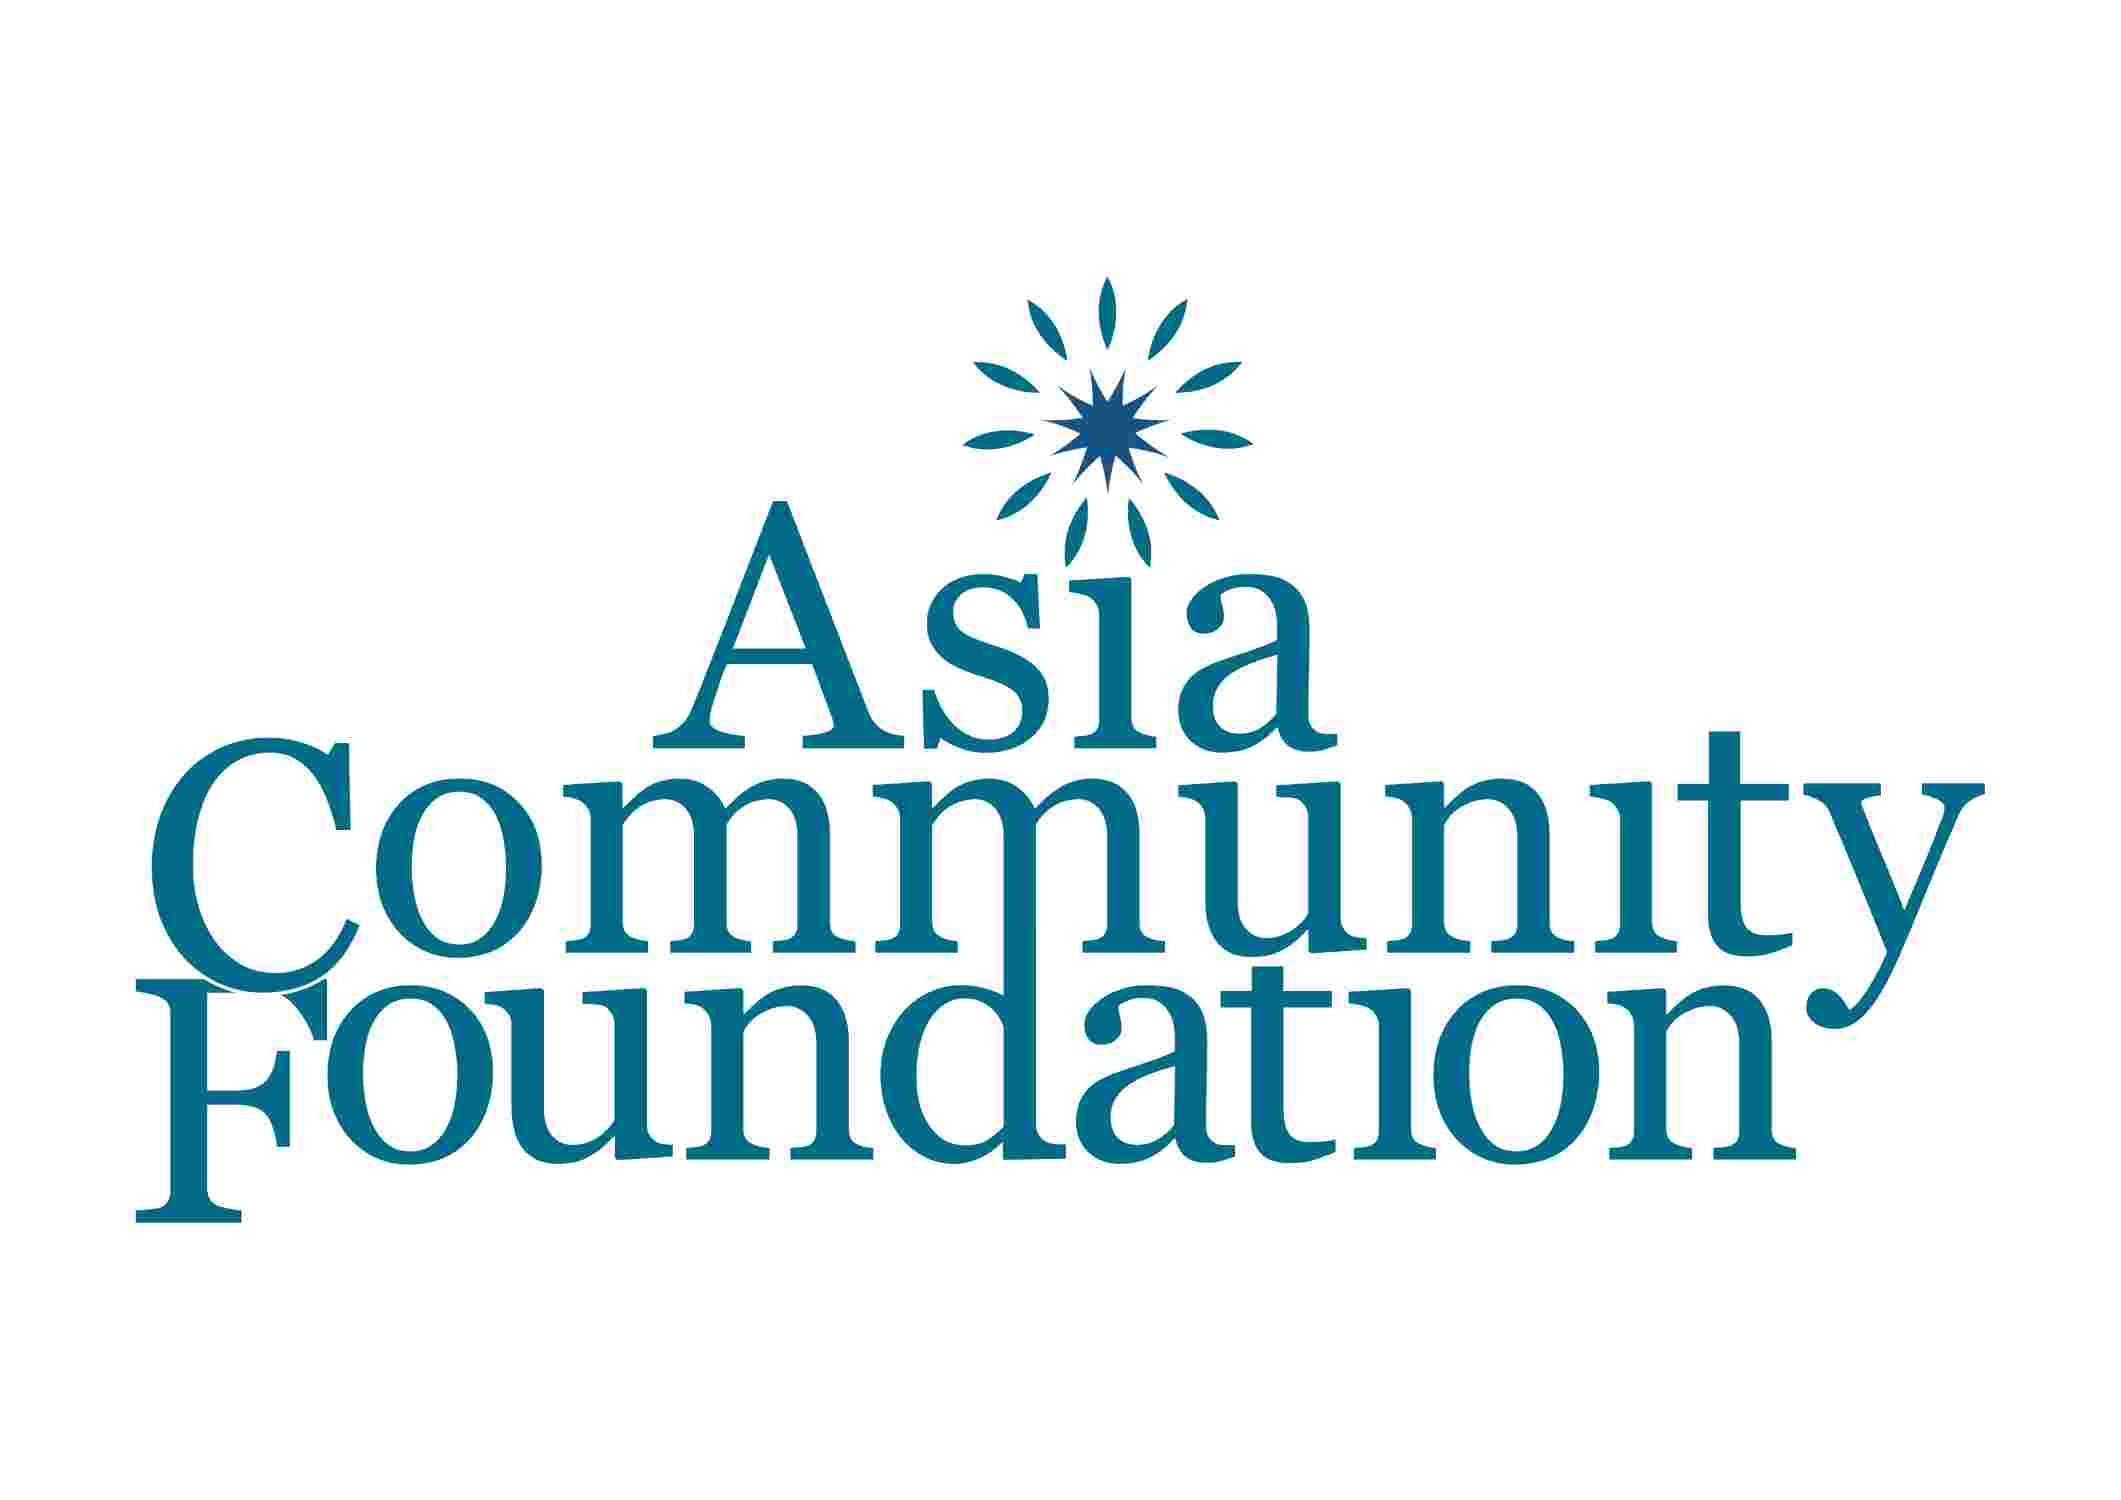 Asia Community Foundation Ltd. company logo